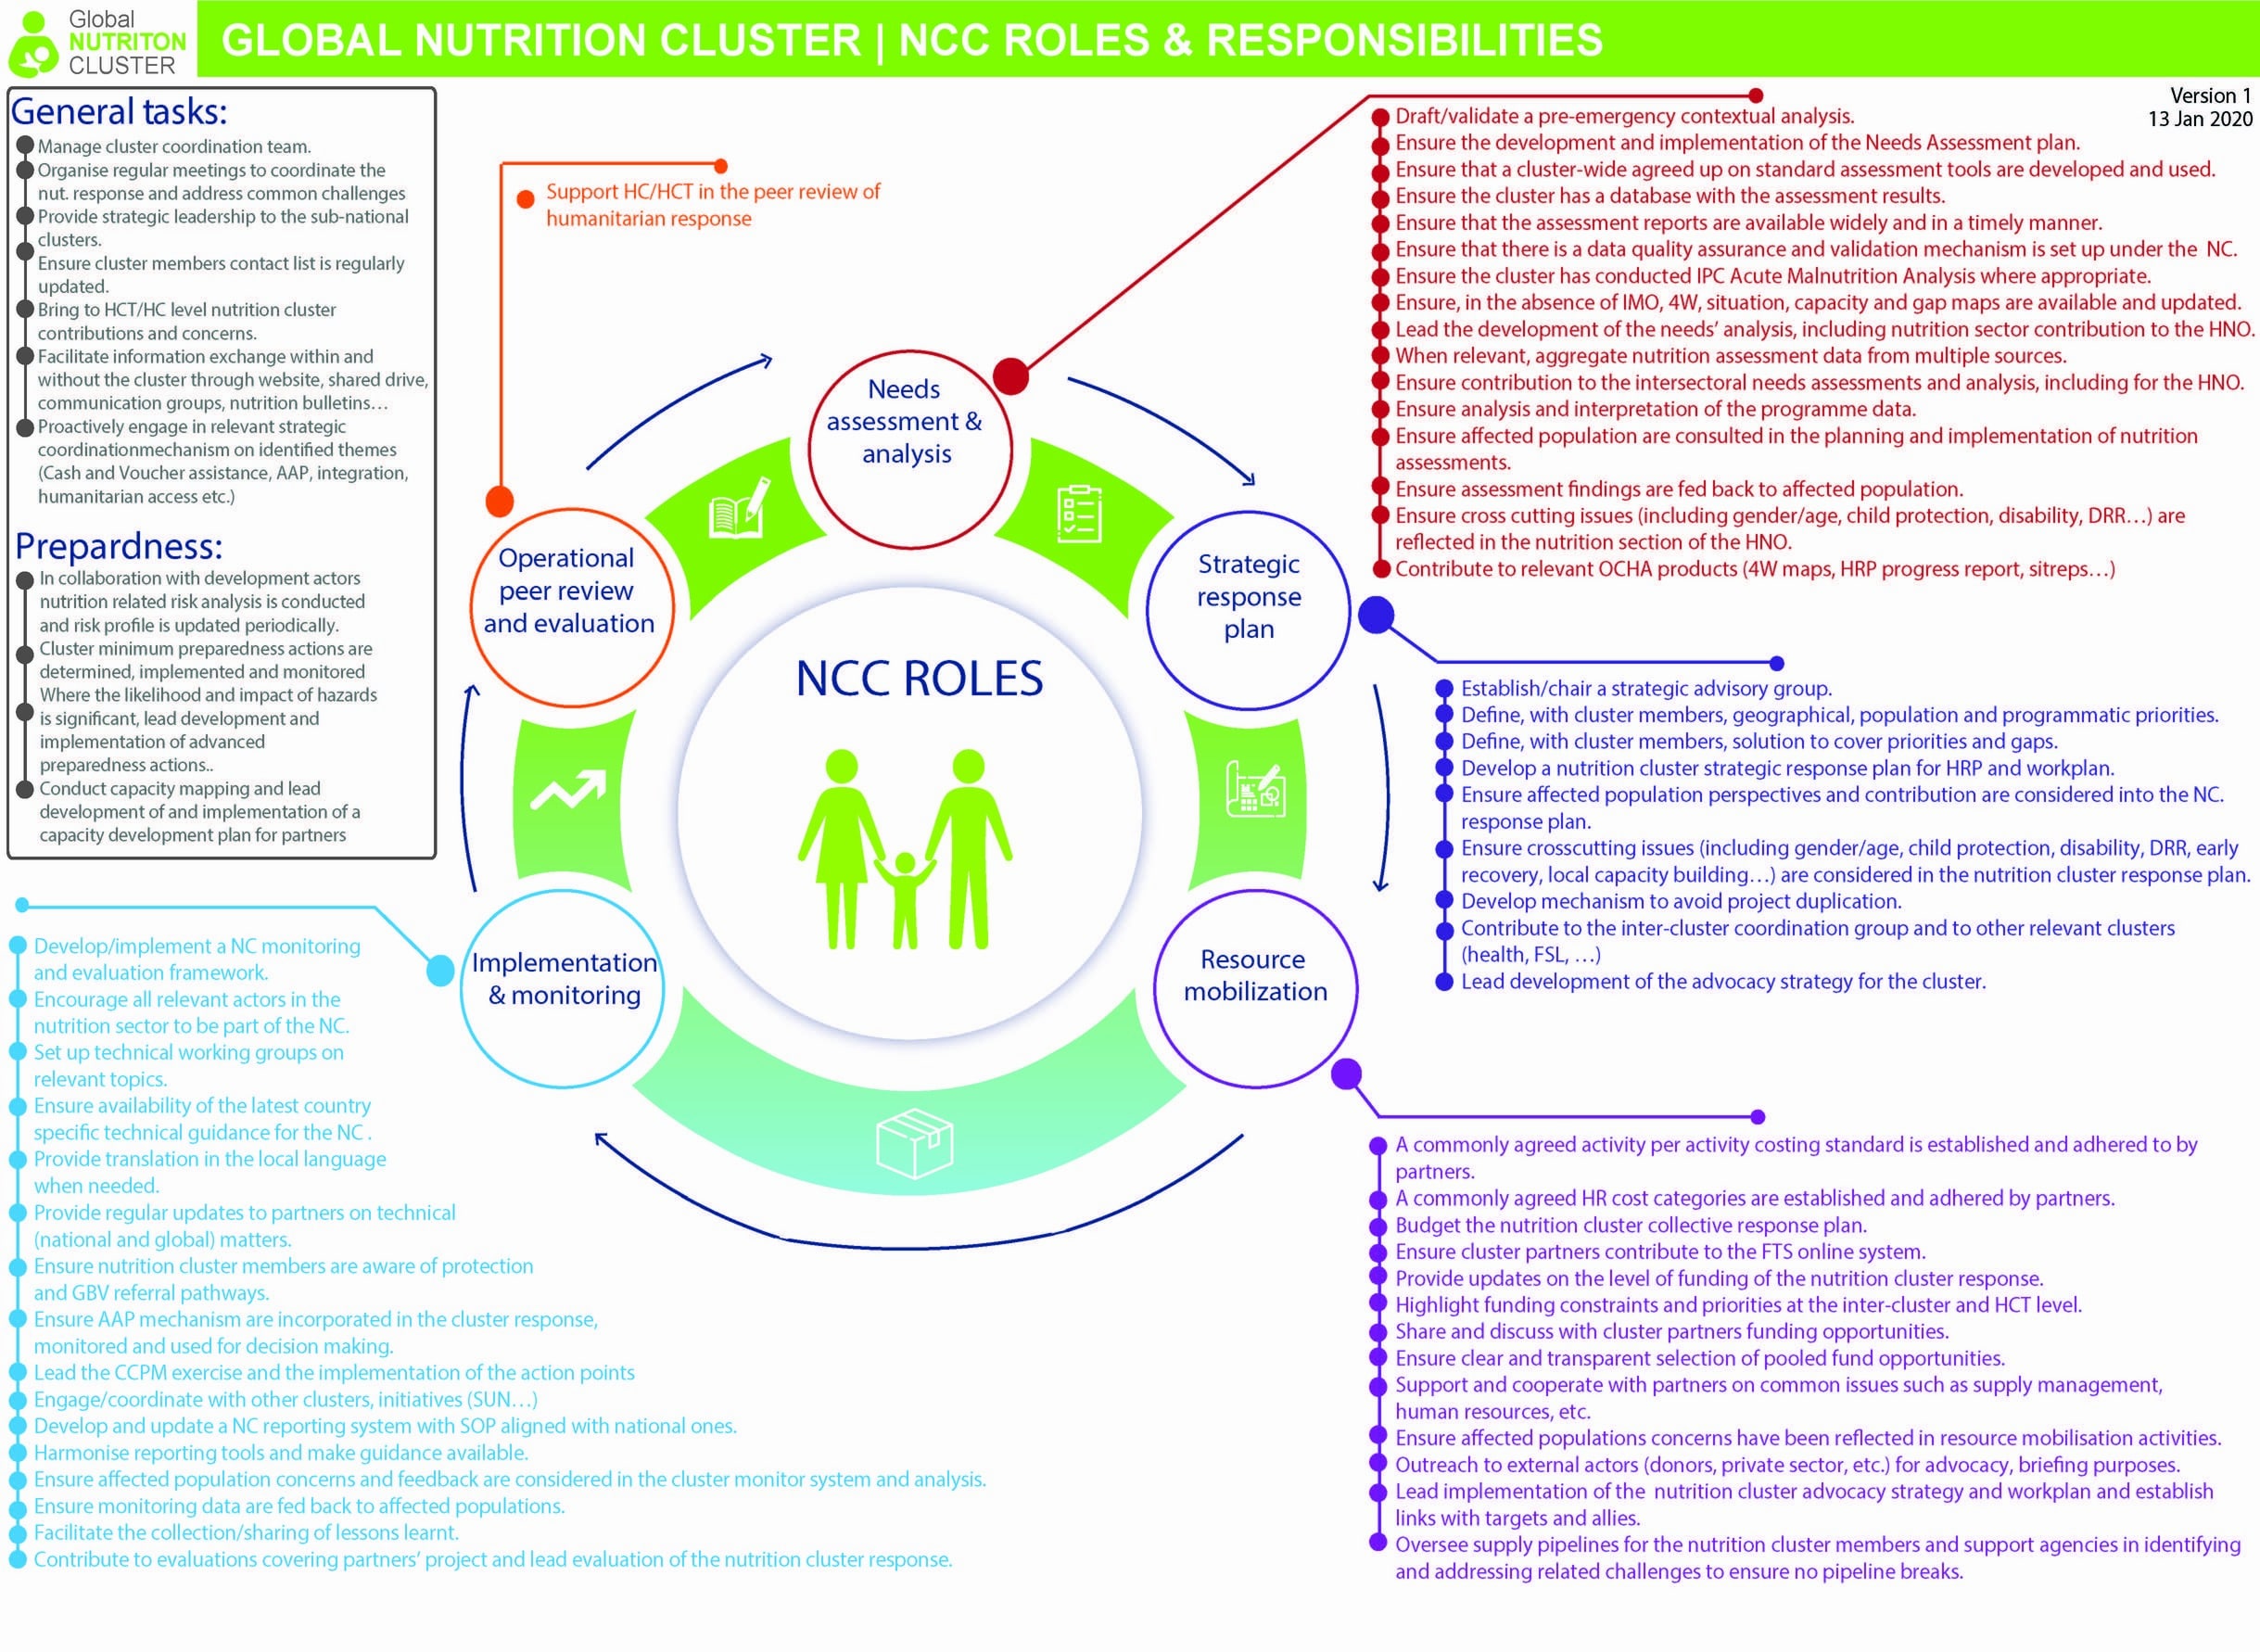 NCC roles